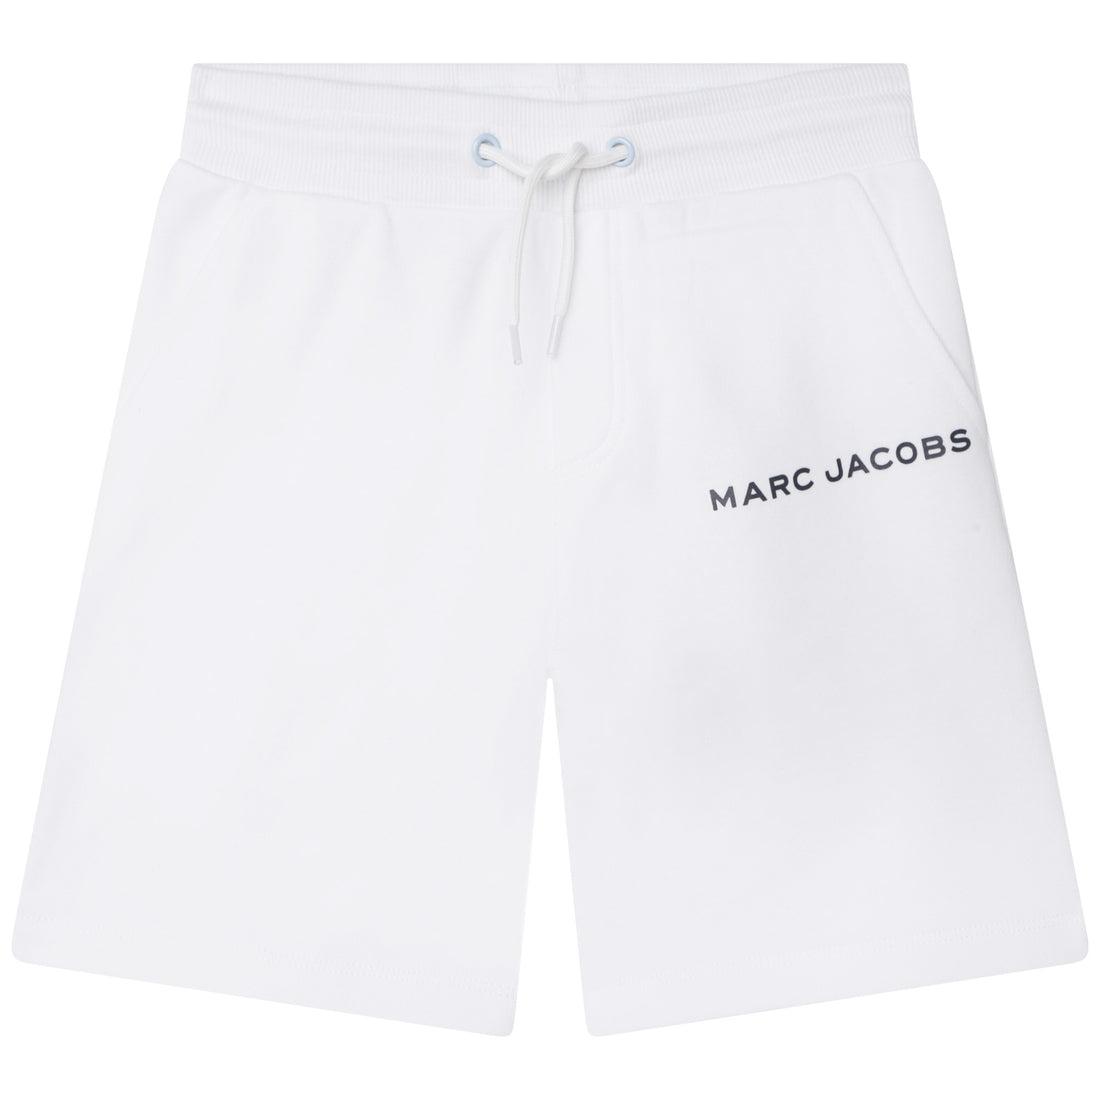 Marc Jacobs Bermuda Shorts Style: W54001